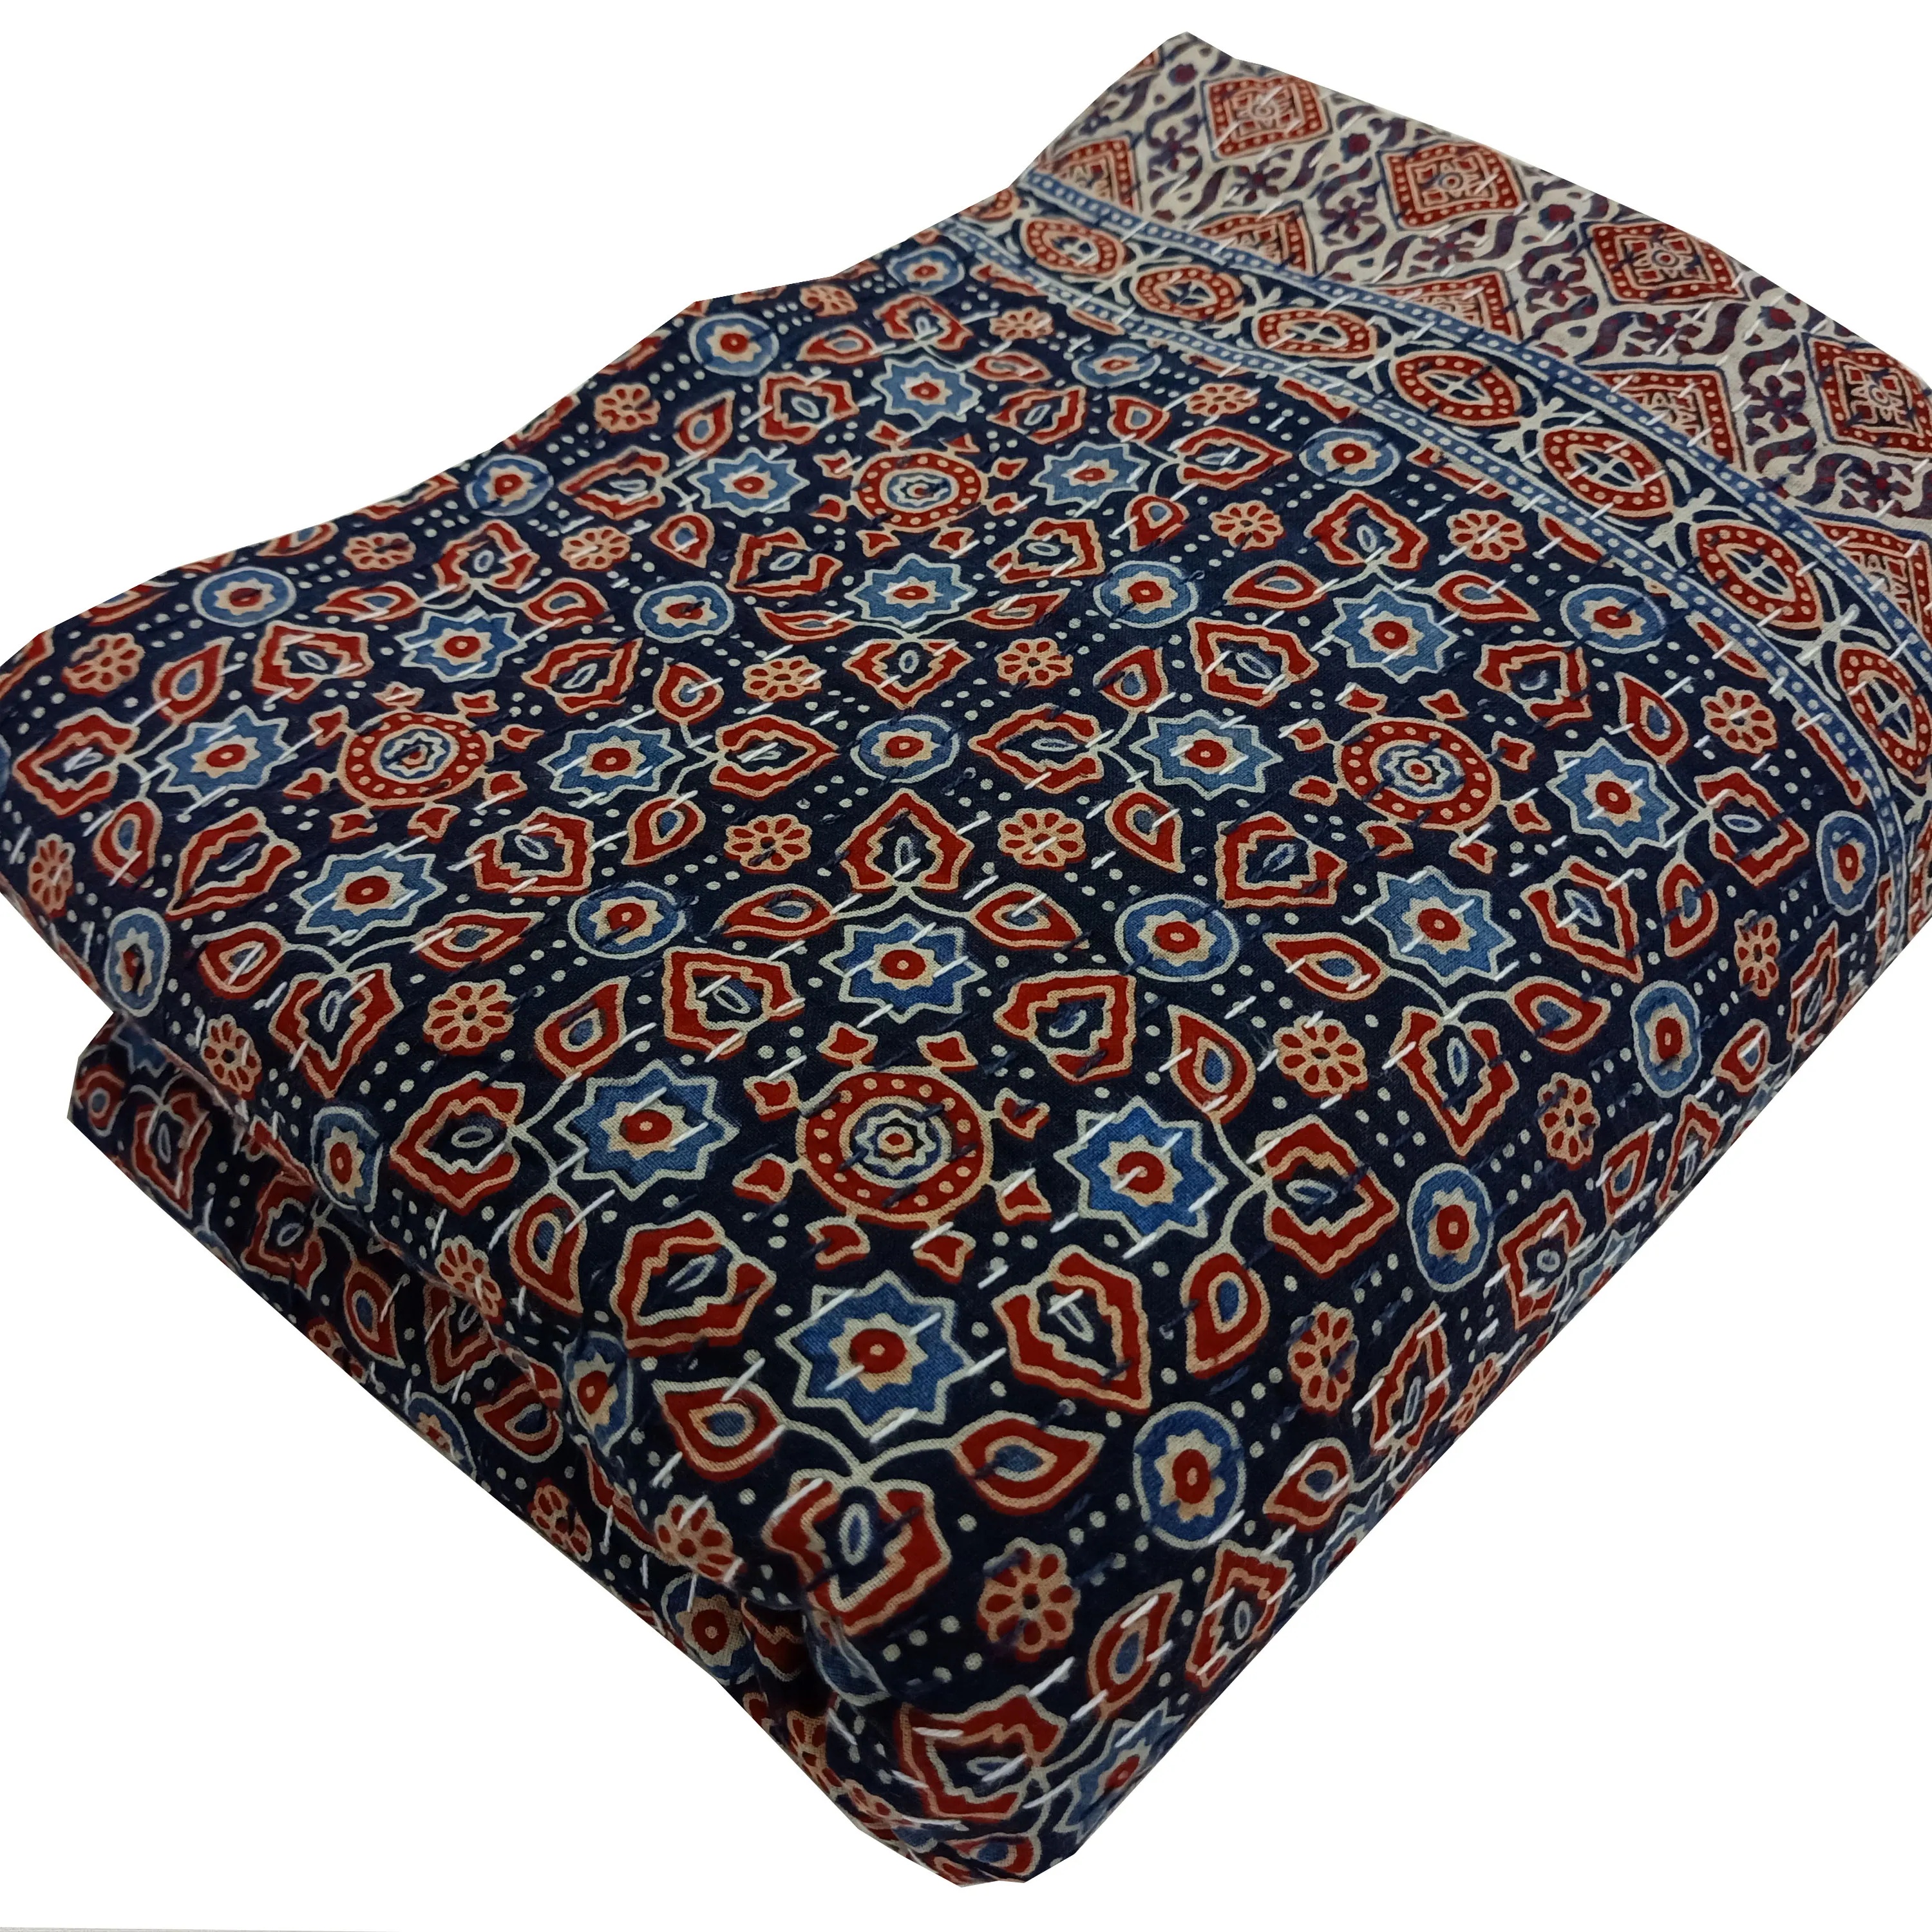 Cotton Kantha Ajrakh Hand Block Print Bedcover Hand Stitch Coverlet Handmade Throw King Size Comforter Indian Vintage Bedding